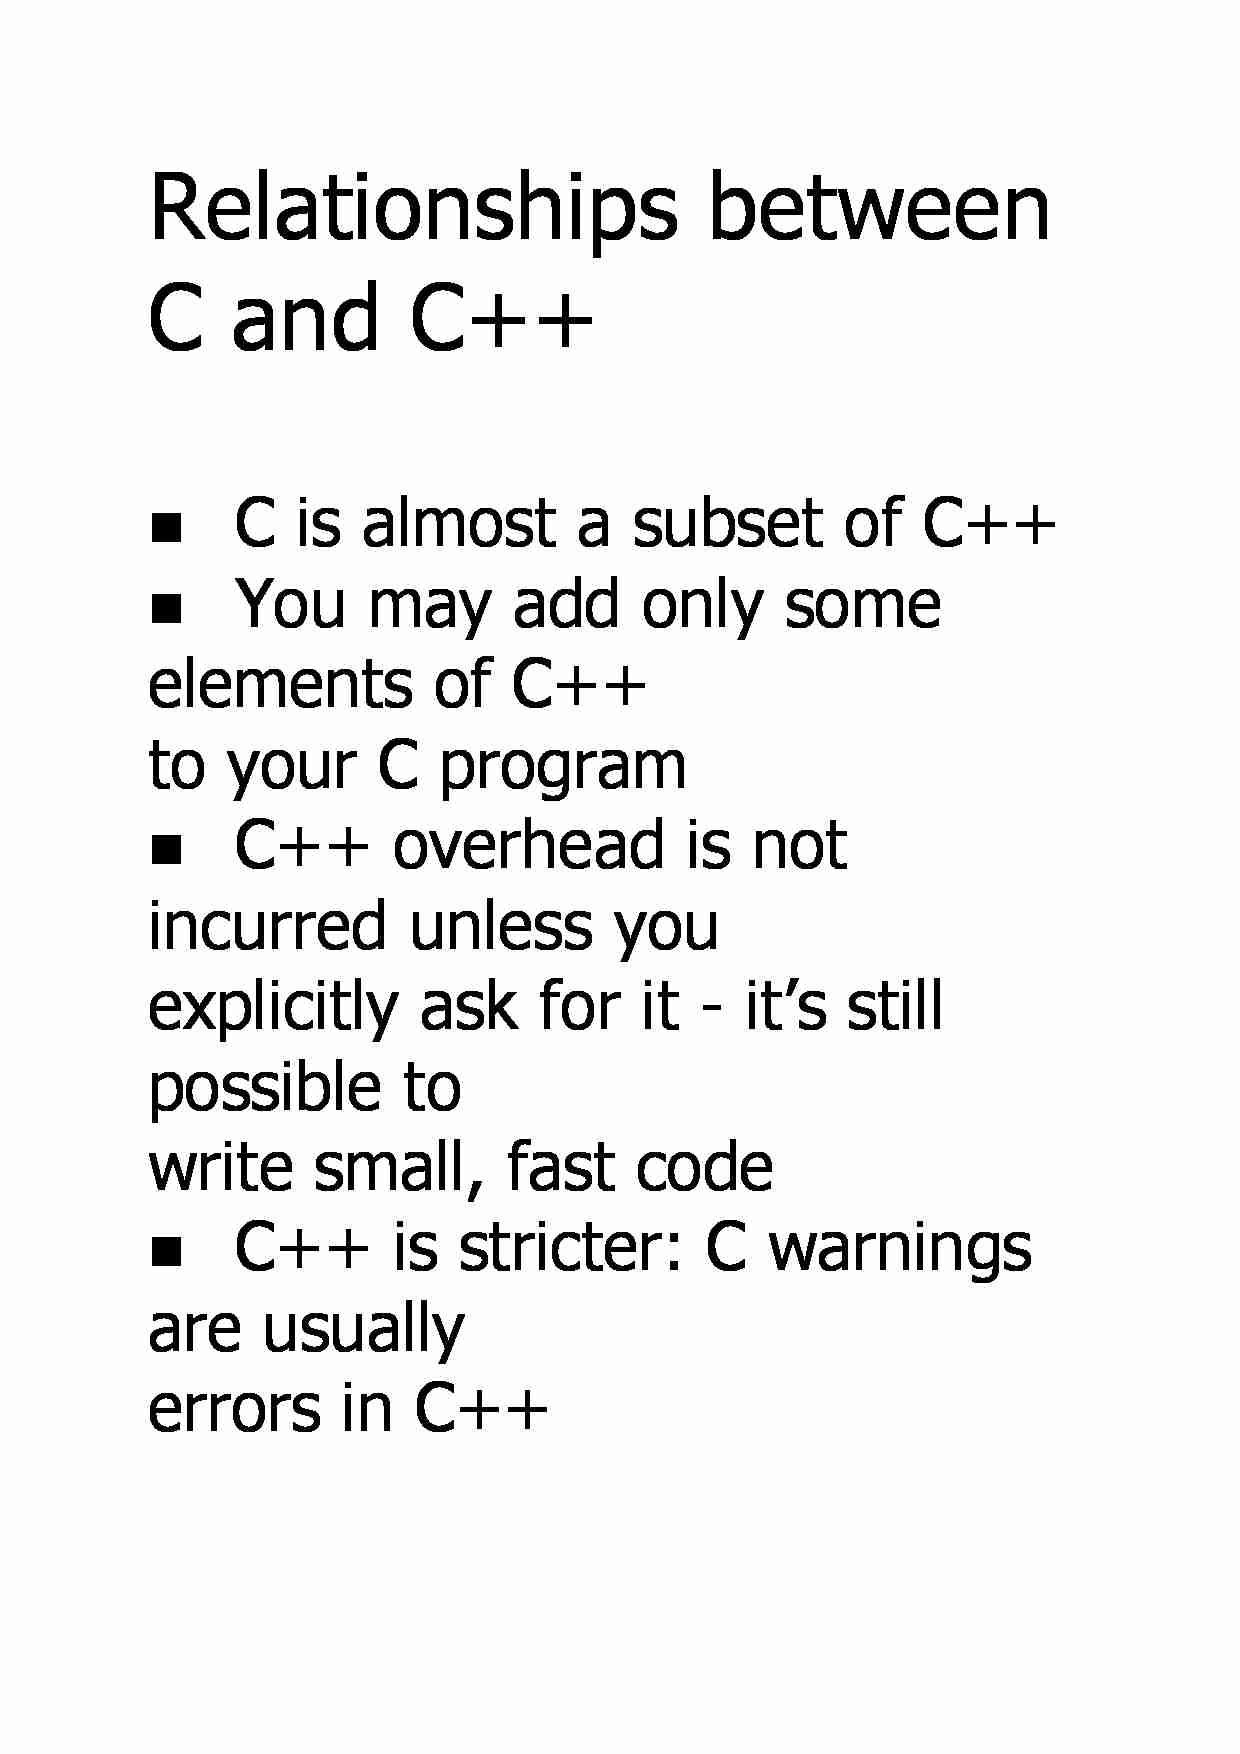 Relationships between C and C++ - strona 1